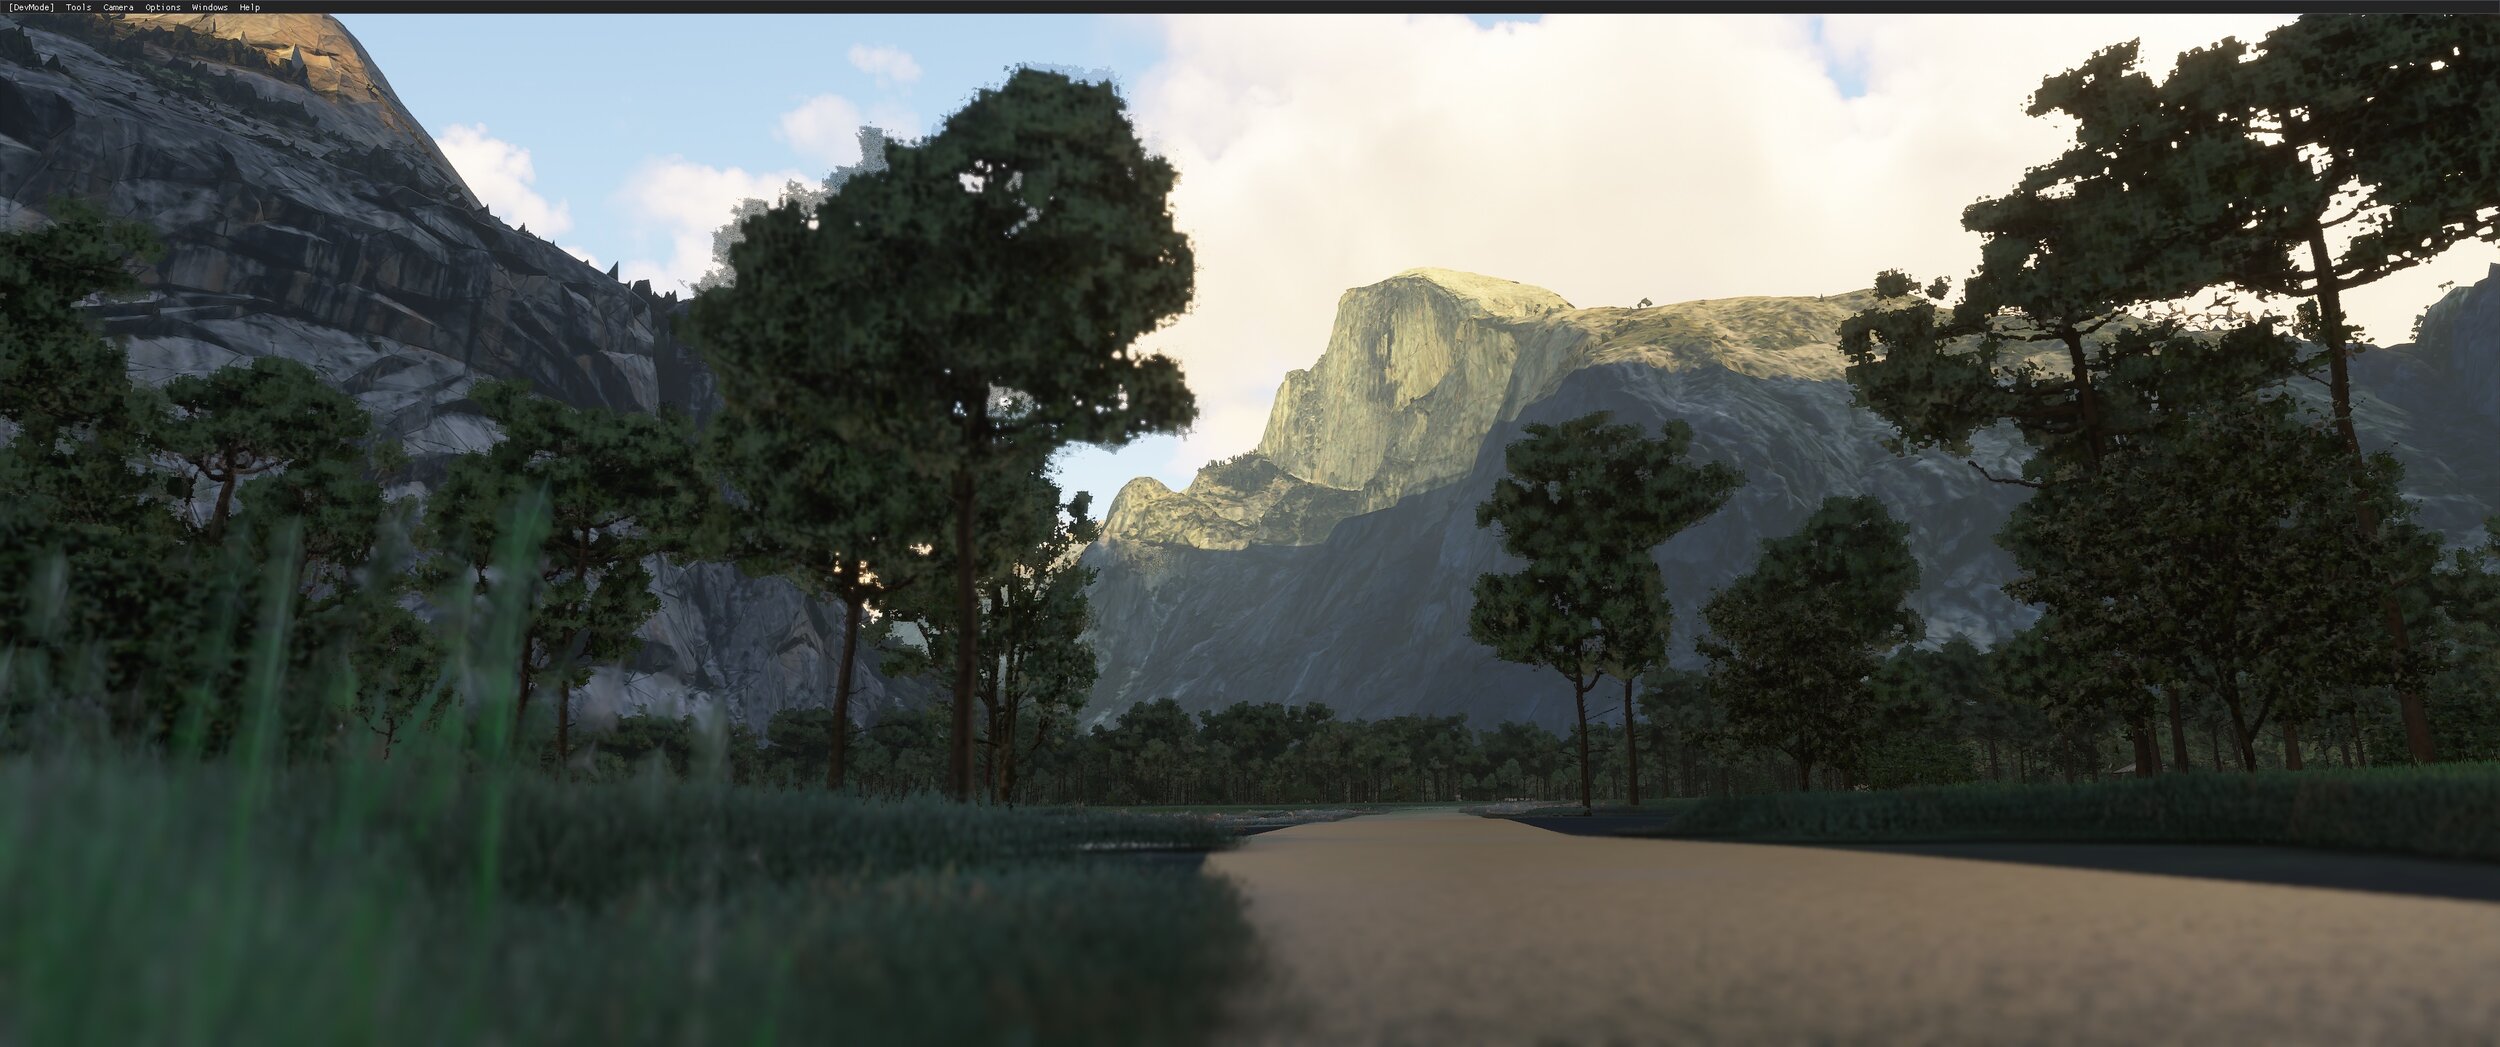 Yosemite_Valley5.jpg